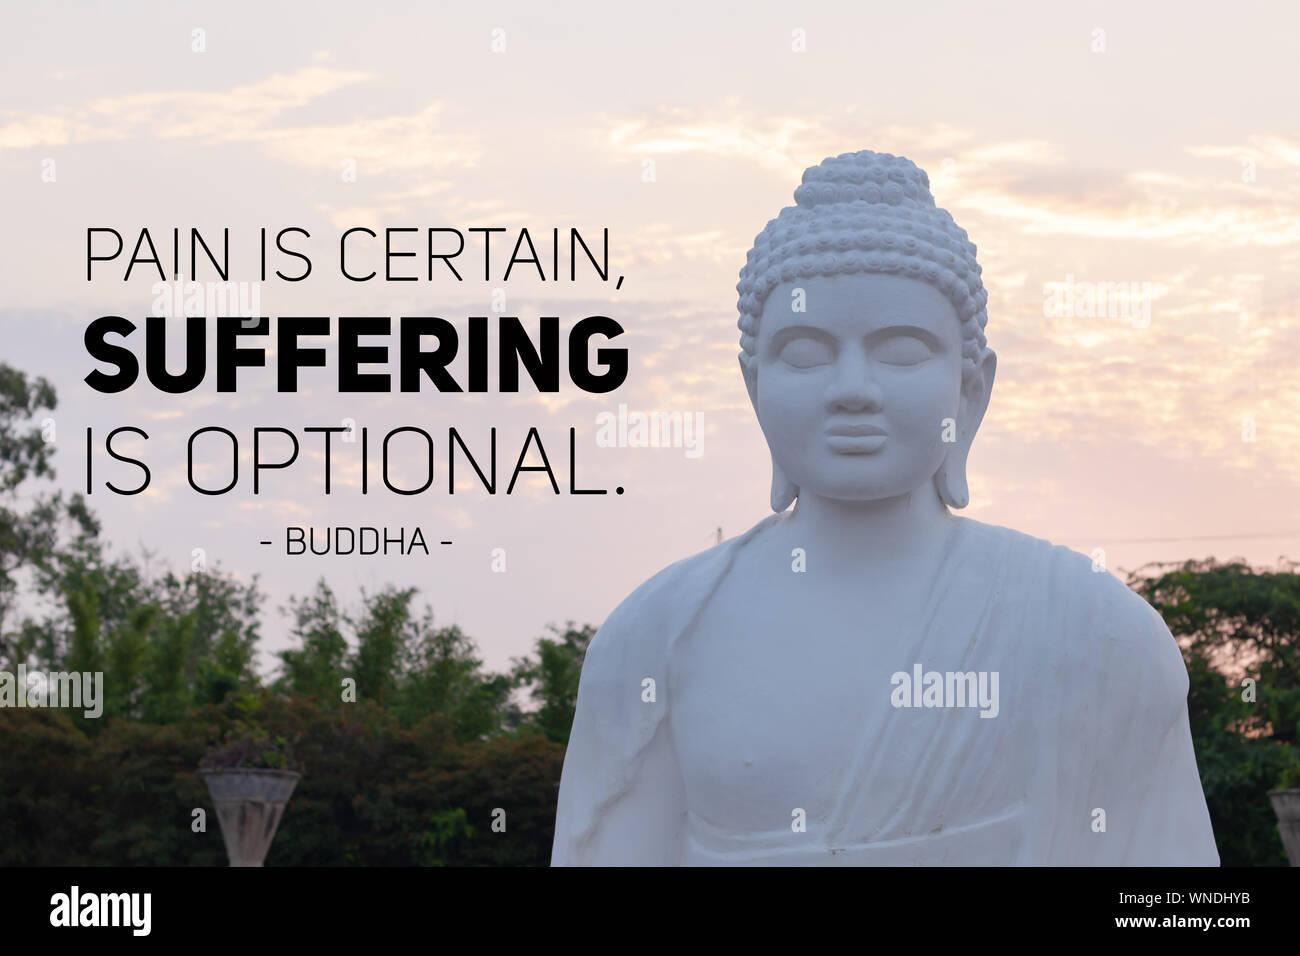 Pain is certain suffering is optional - buddha Stock Photo